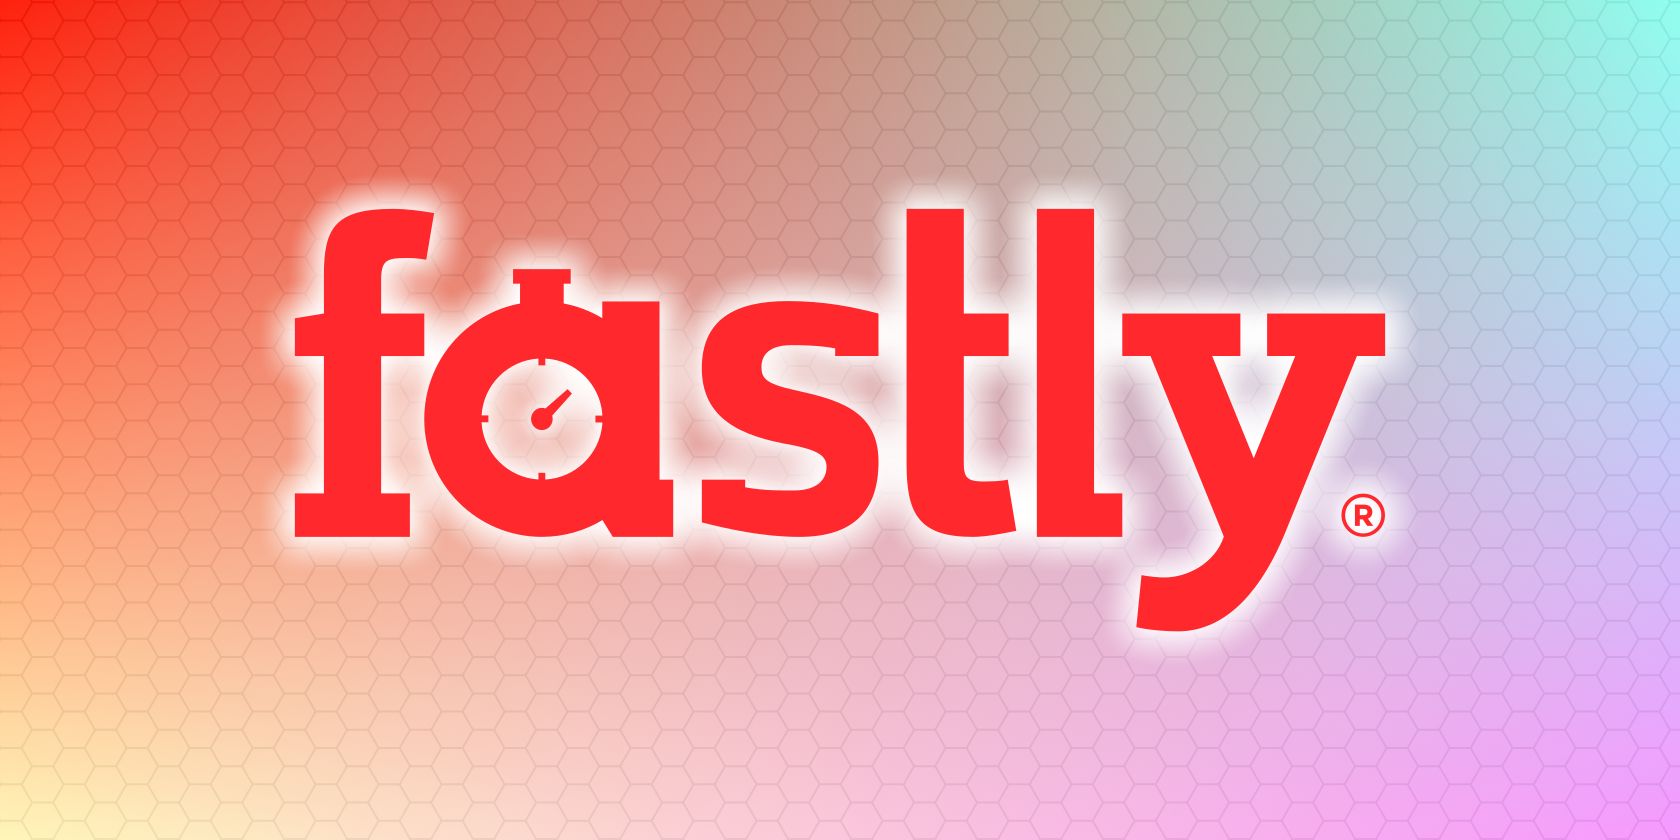 fastly cdn logo feature